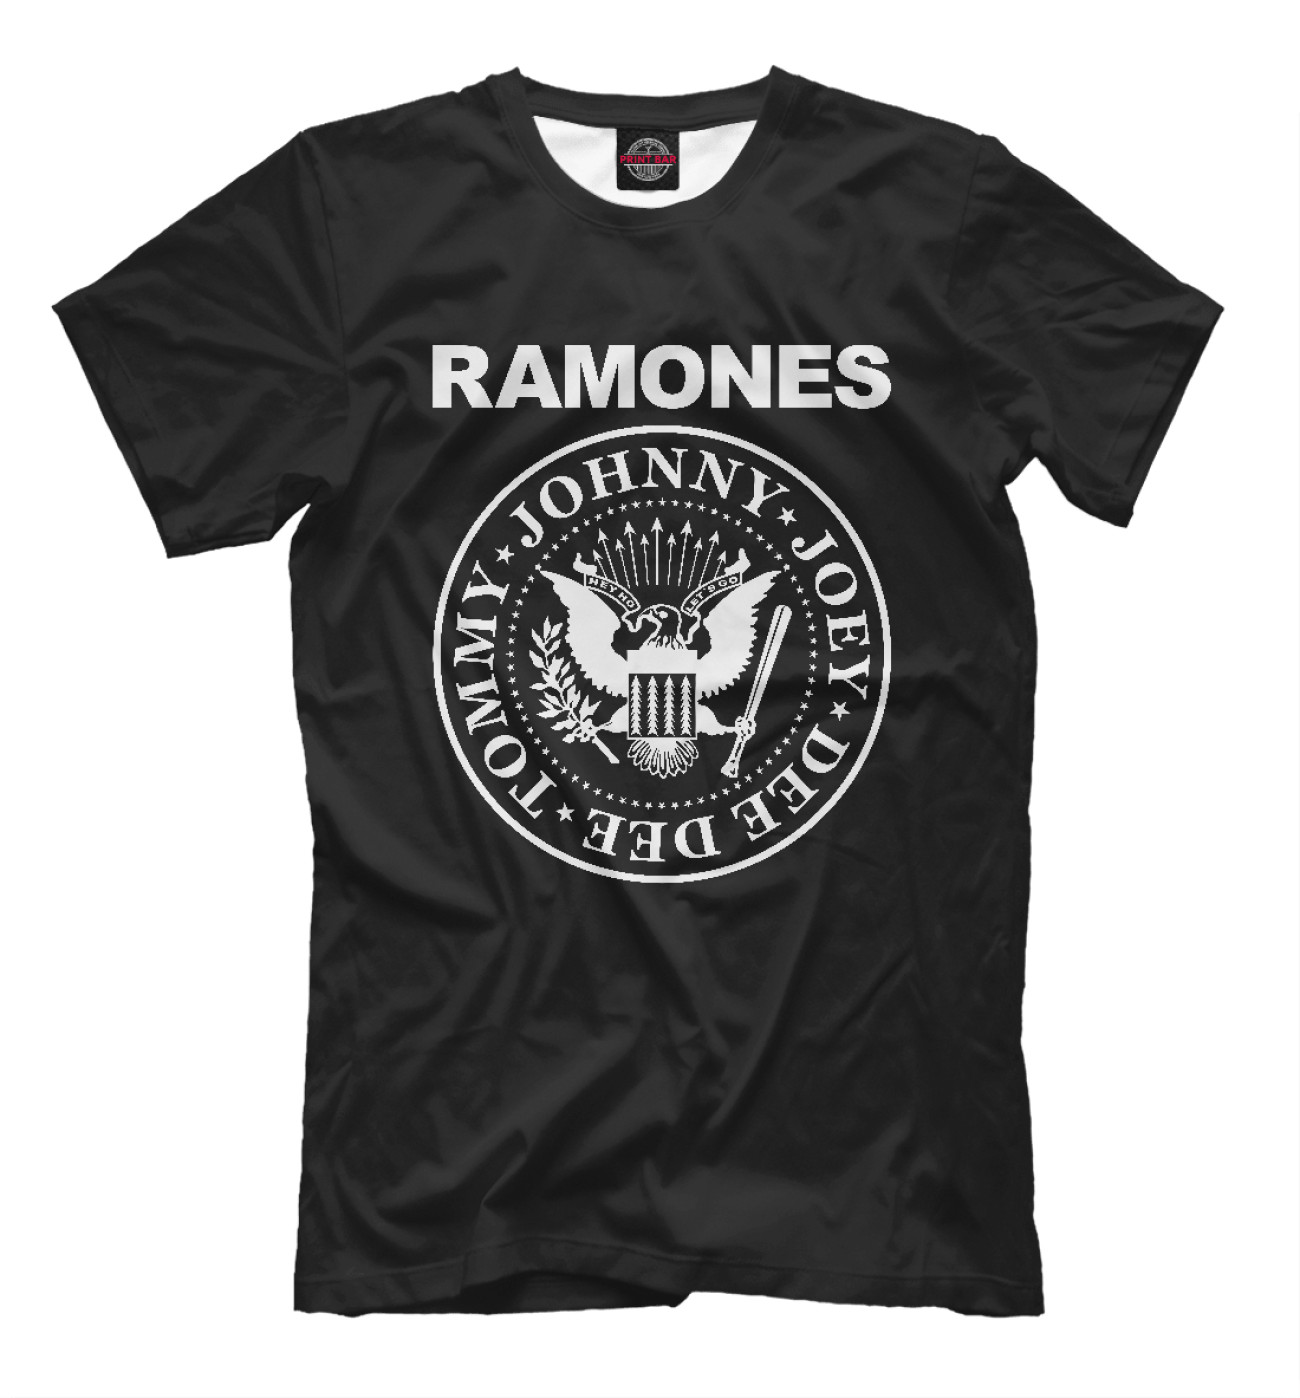 Мужская Футболка Ramones, артикул: RMN-387042-fut-2